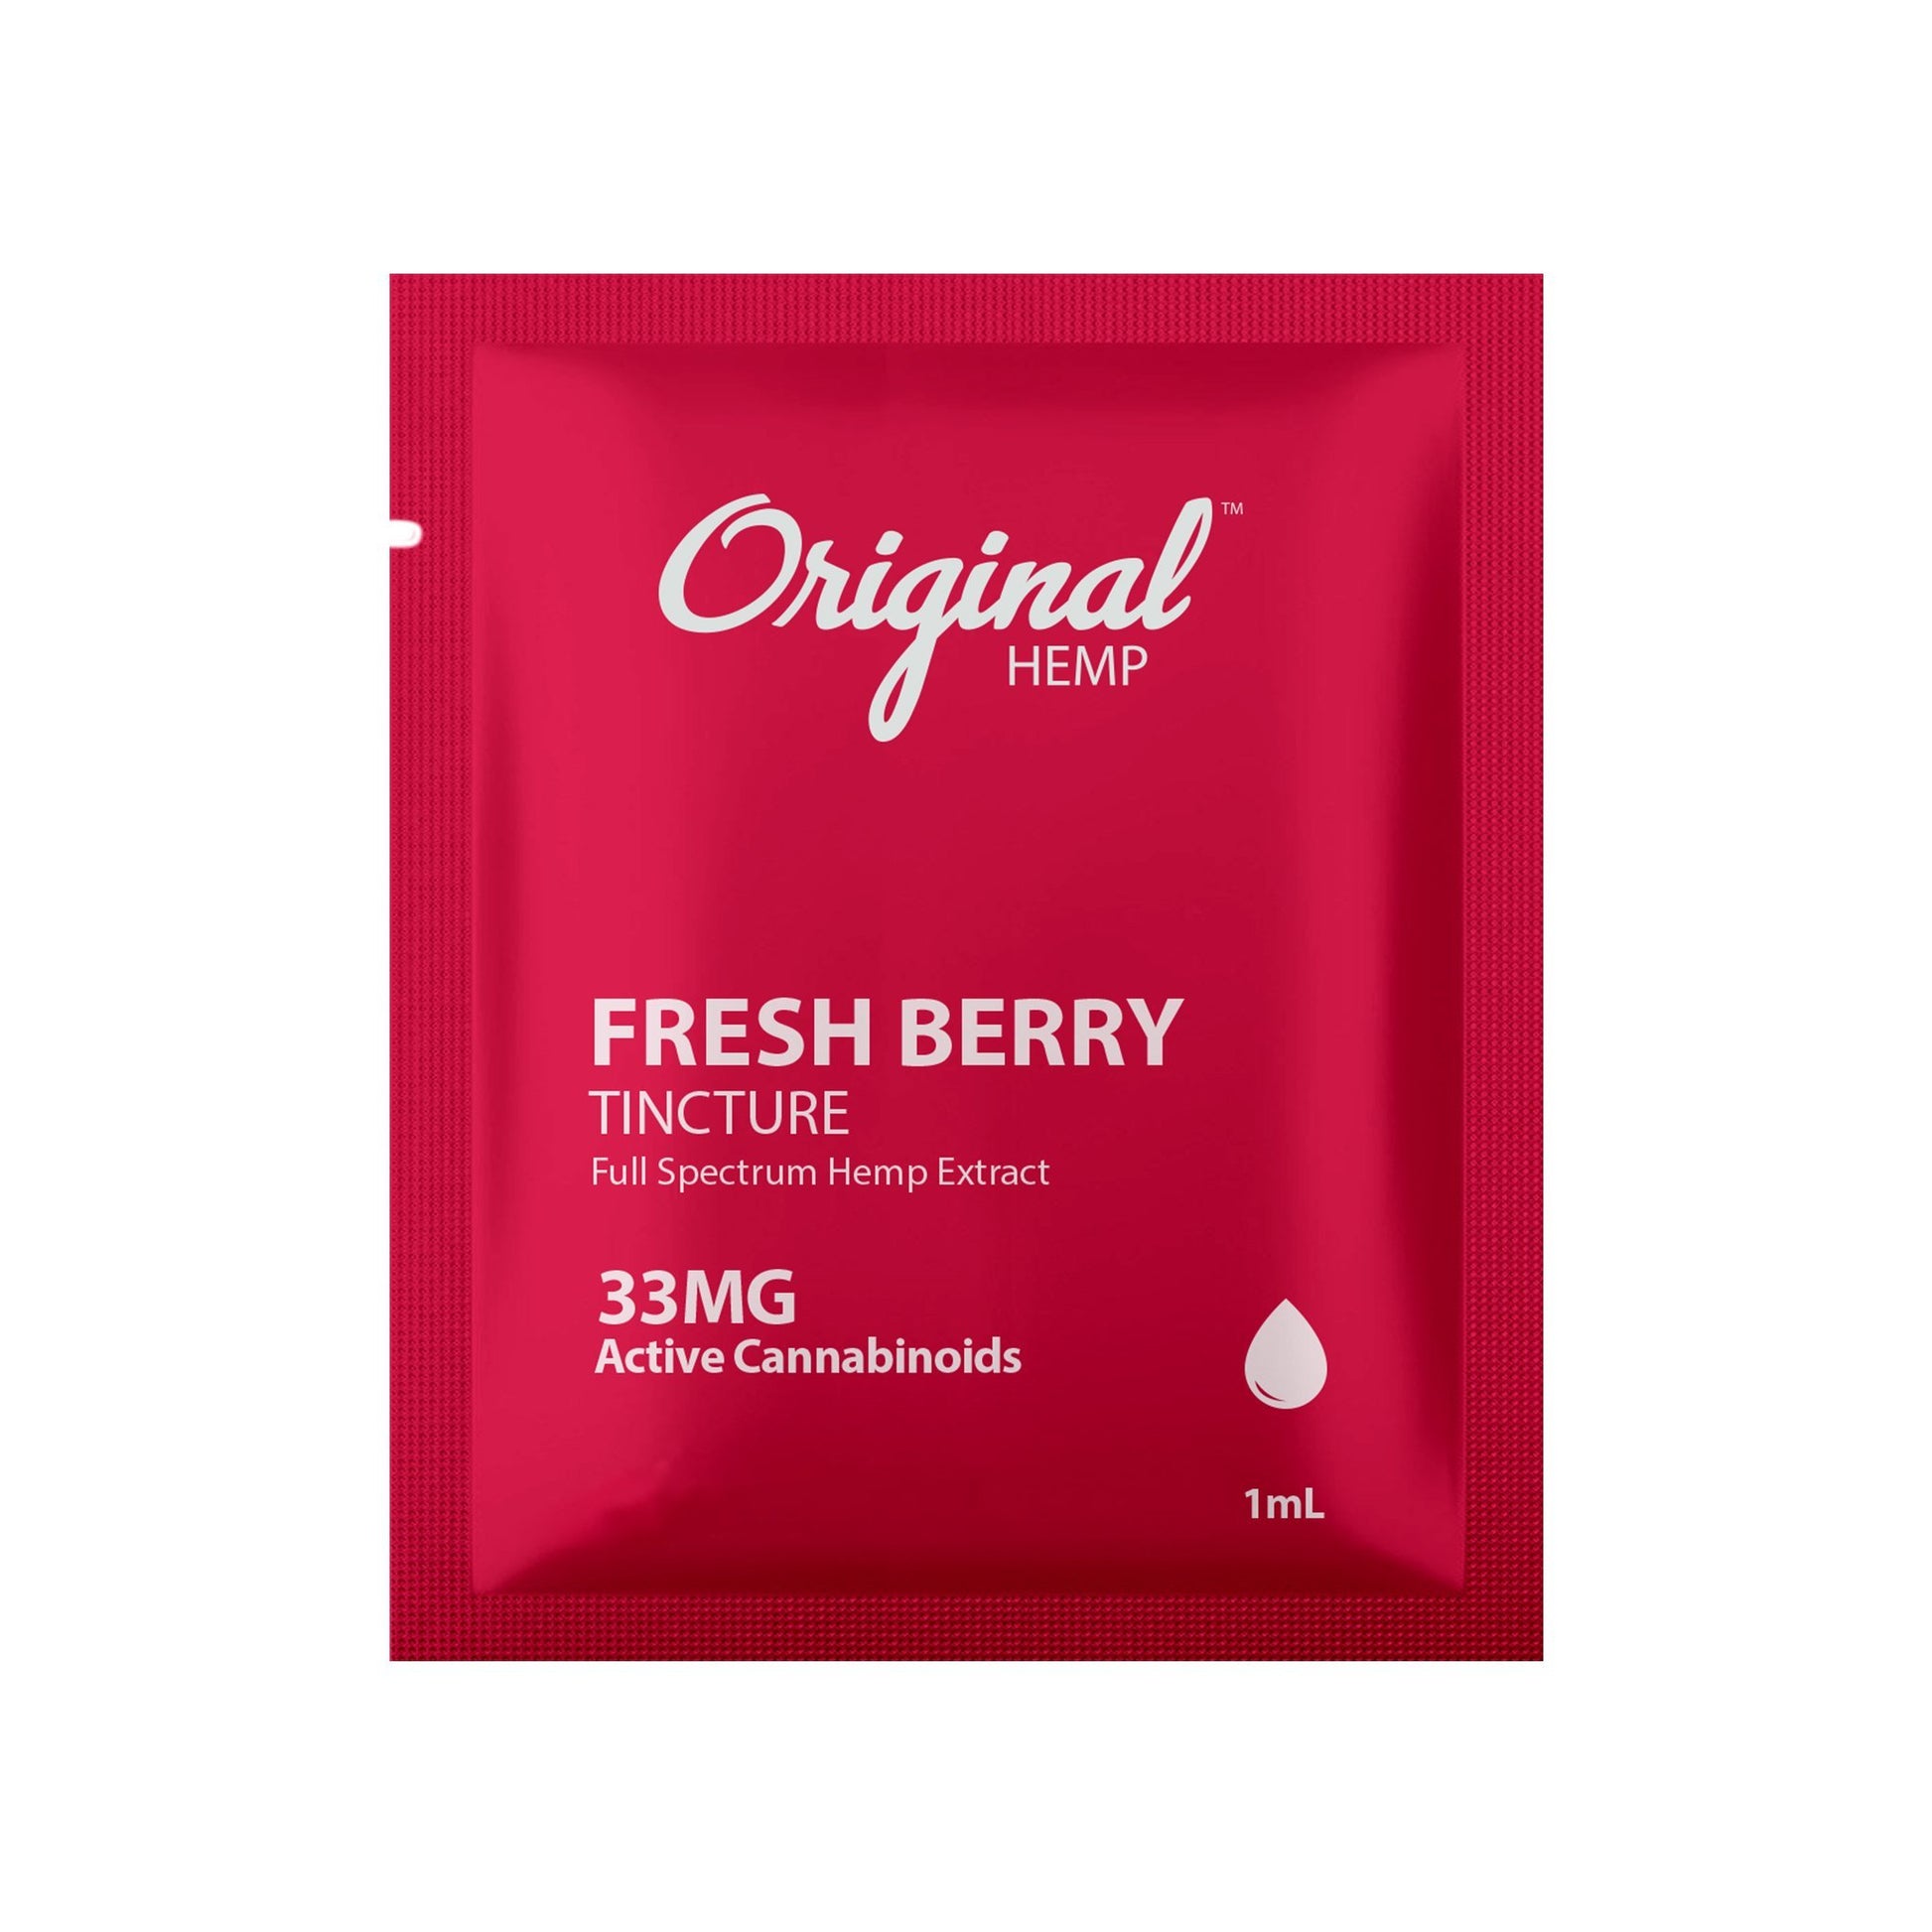 Original Hemp - Daily Dose - 33mg 33mg / Fresh Berry